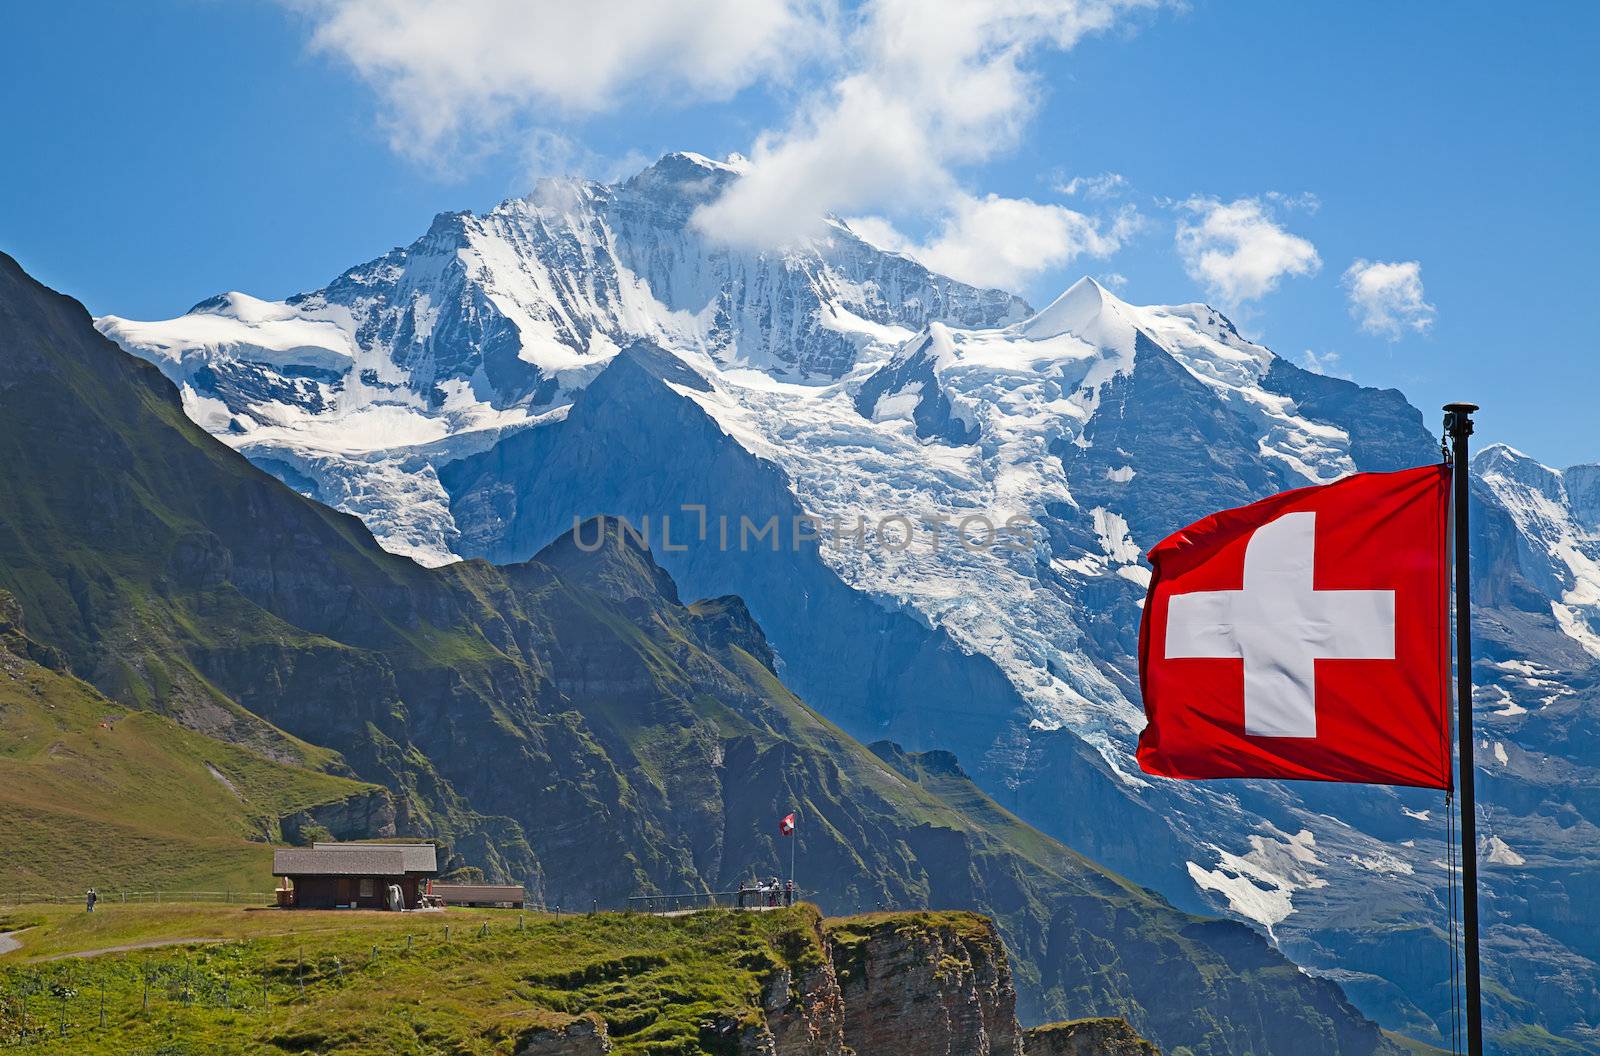 Famous mount Jungfrau in the swiss alps